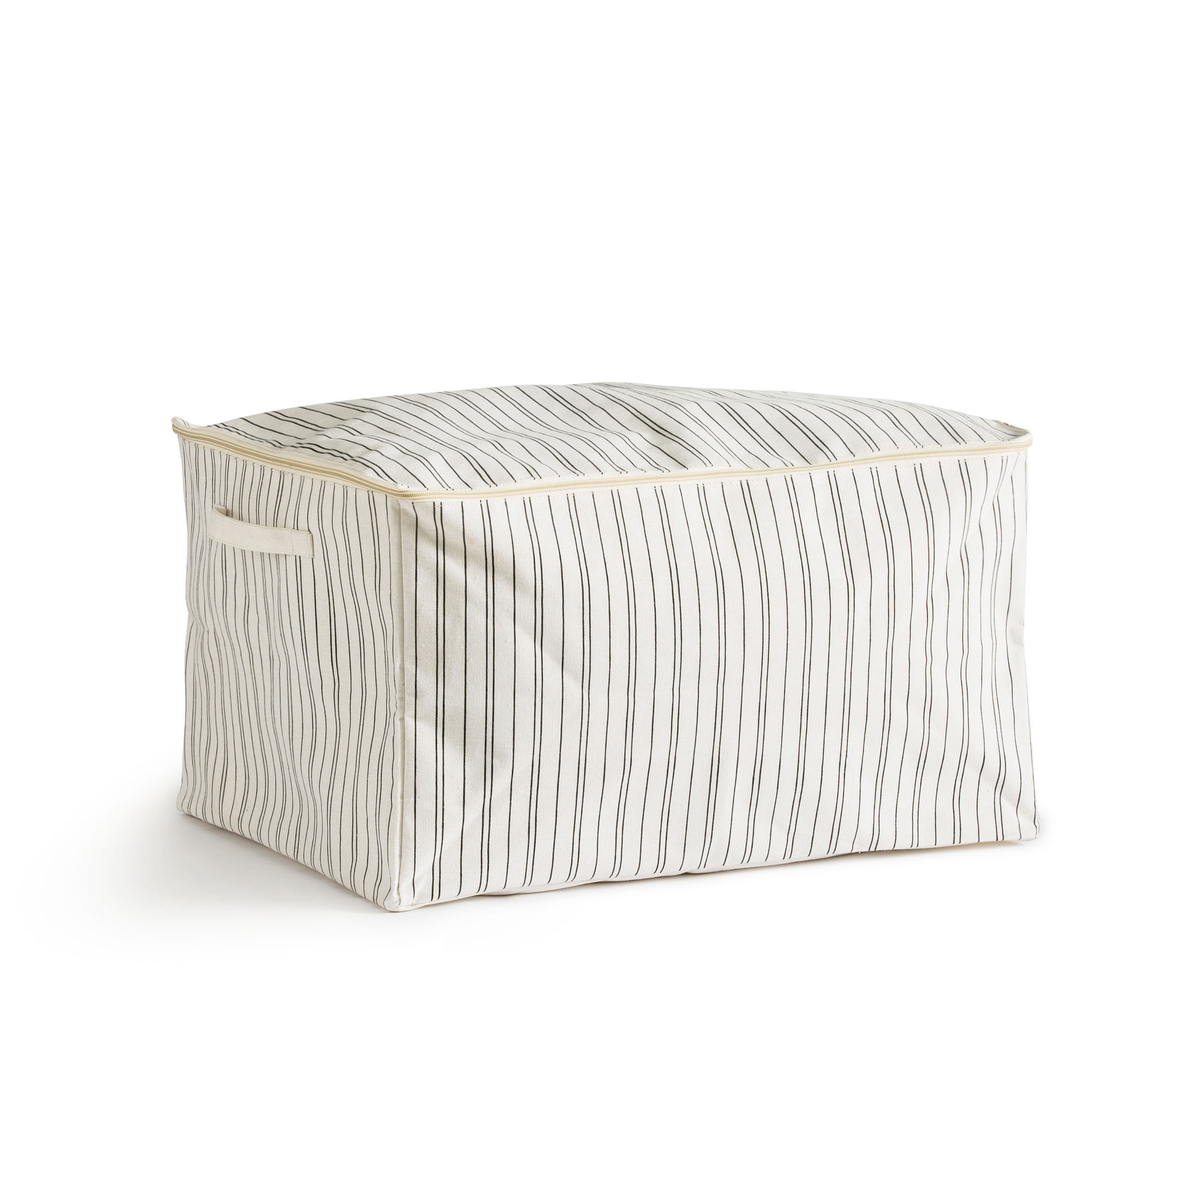 Uzès Striped Cotton XL Storage Bag